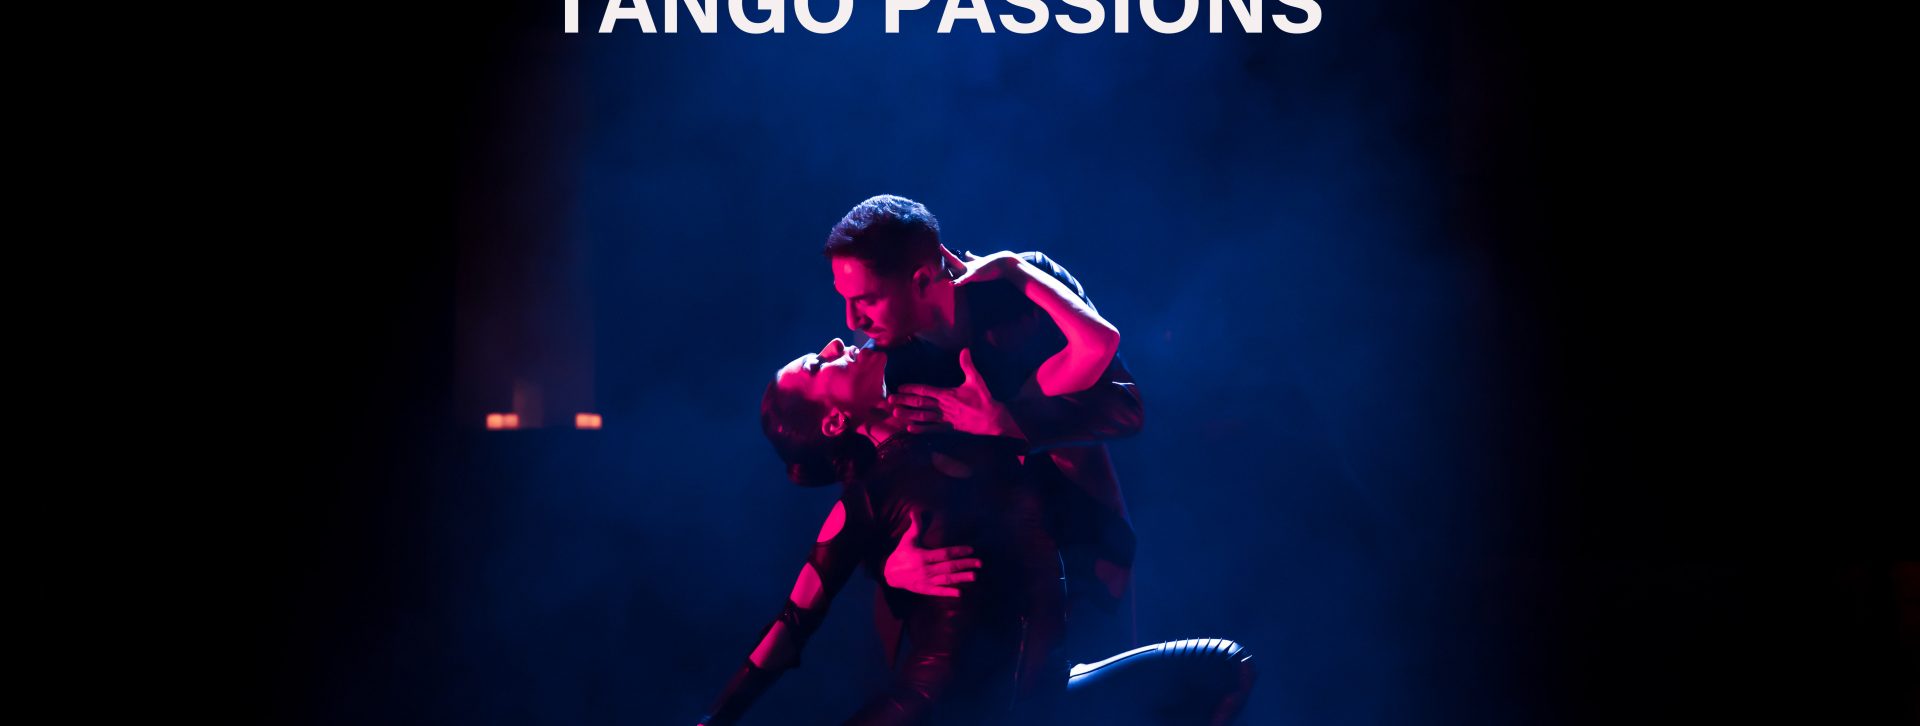 Vincent Simone &#8211; Tango Passions